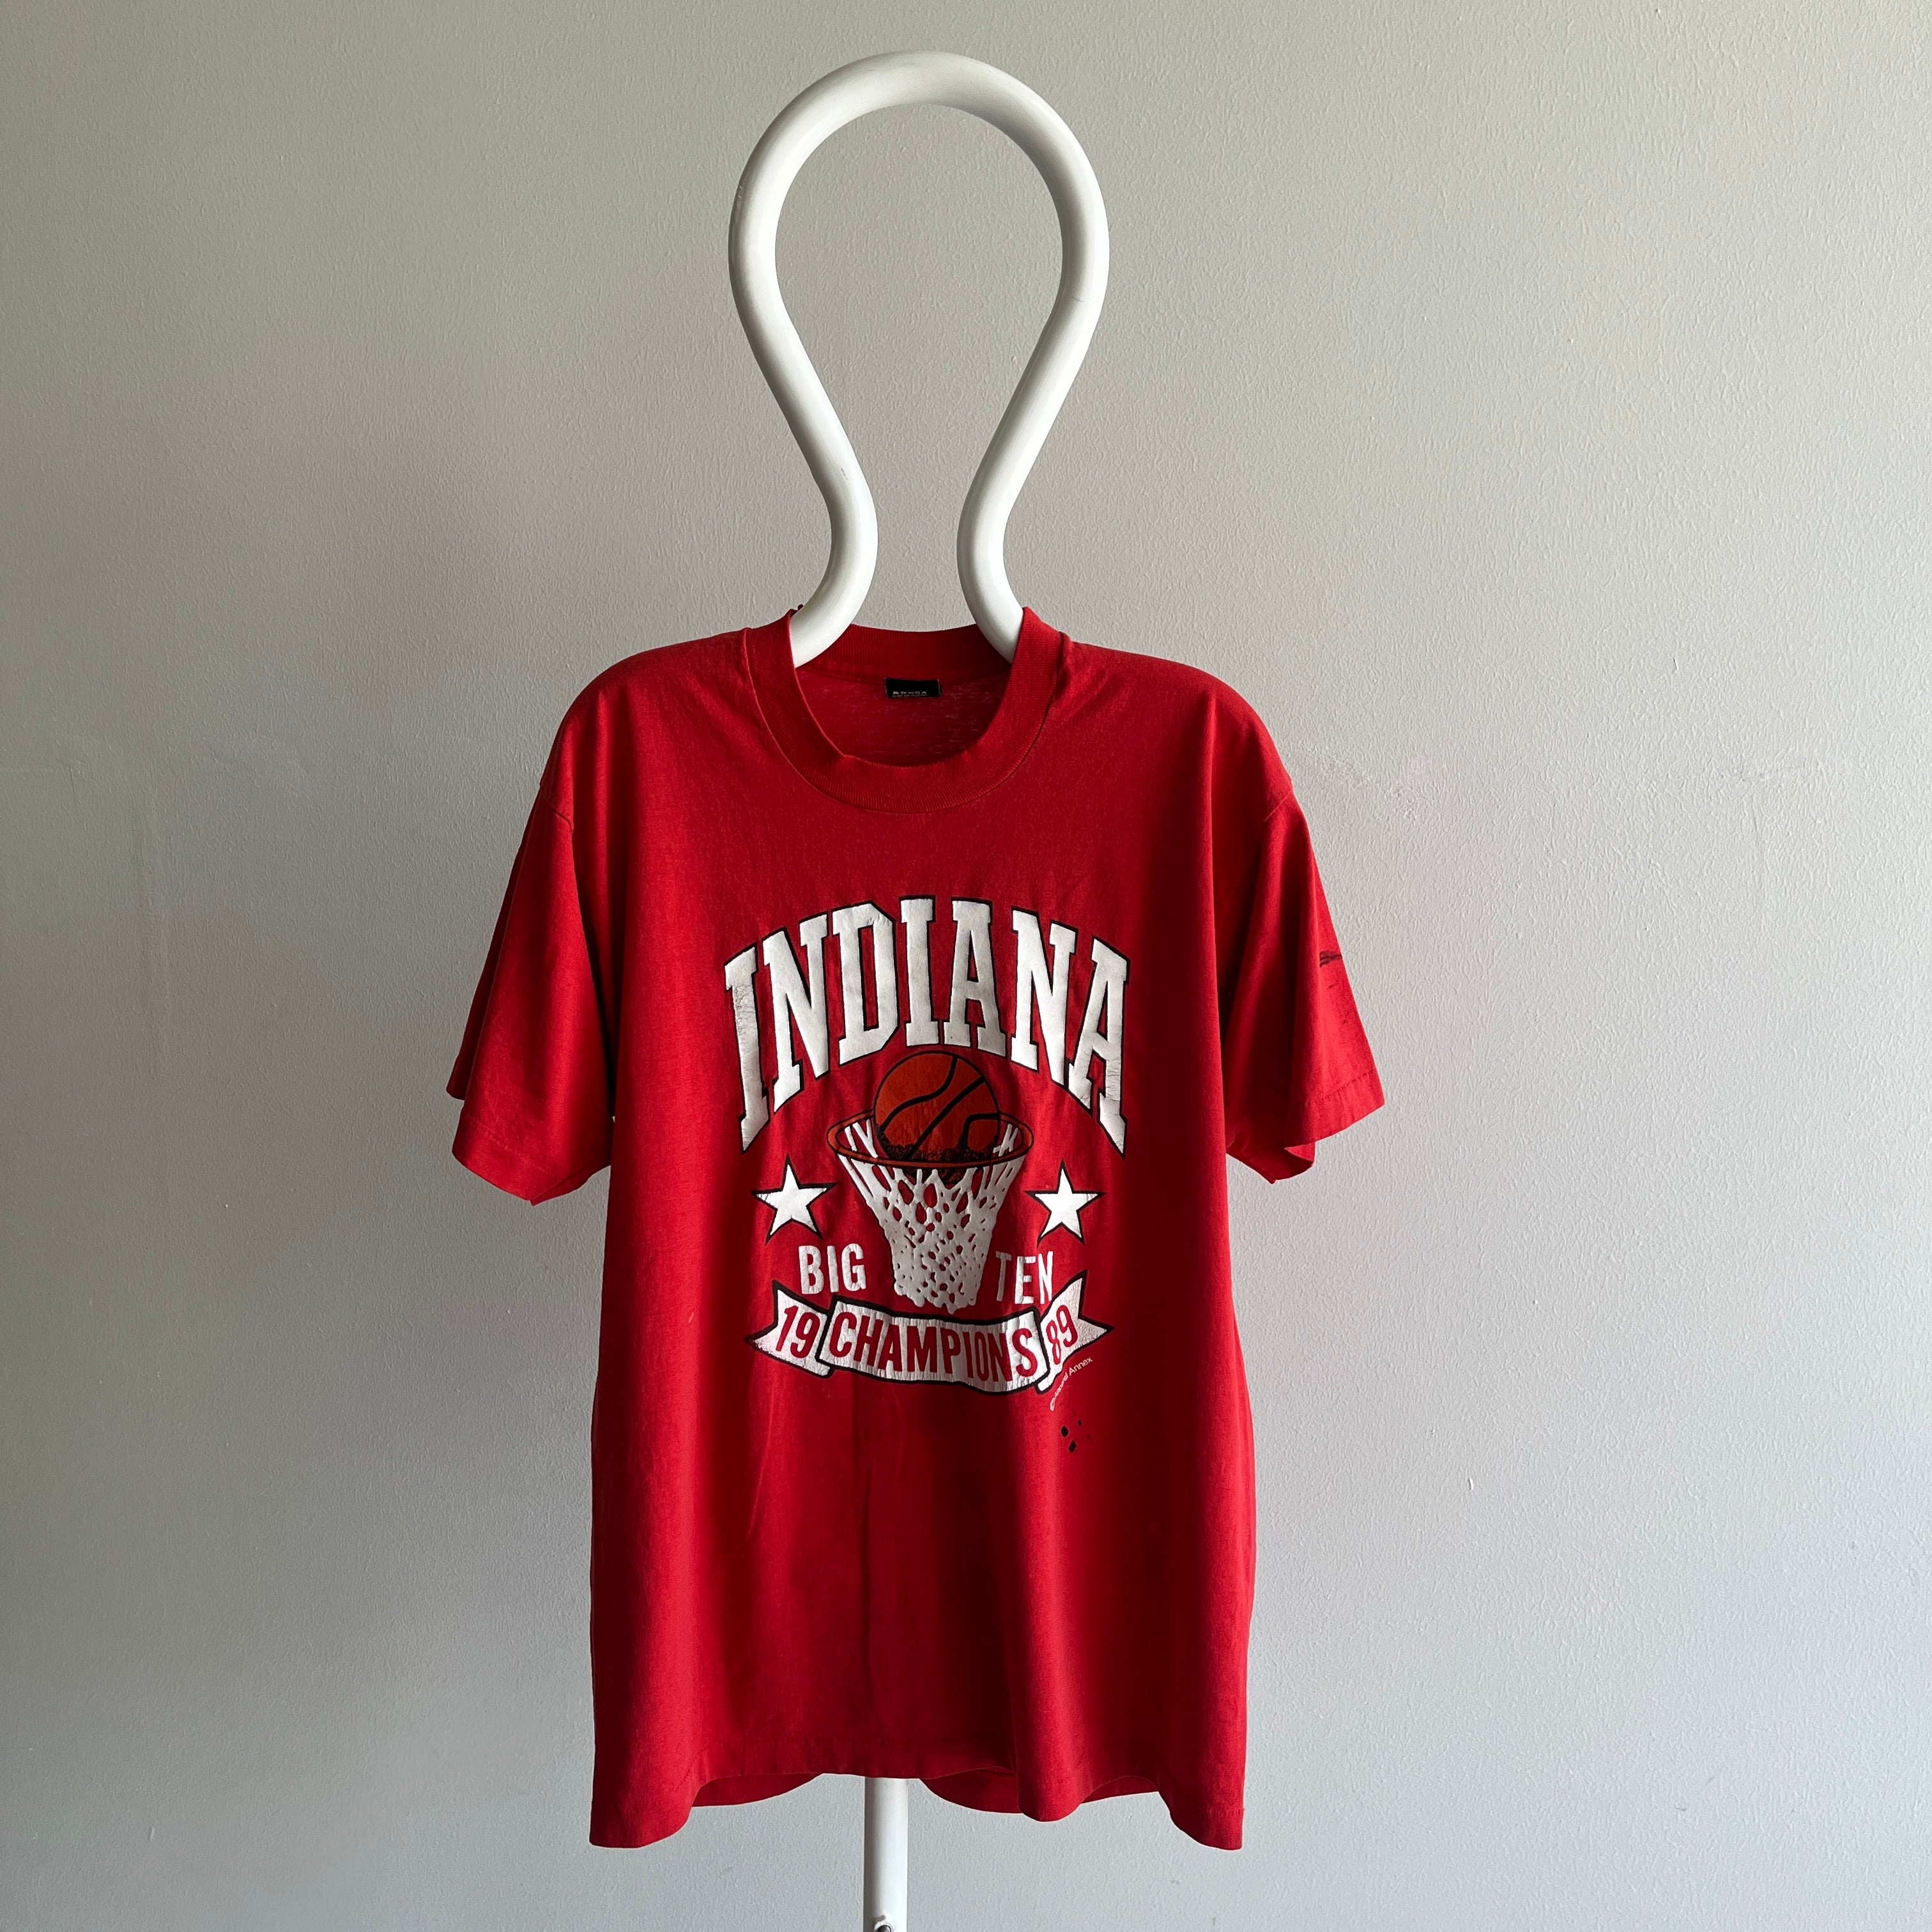 1989 Indiana Big Ten Championships T-Shirt by Screen Stars